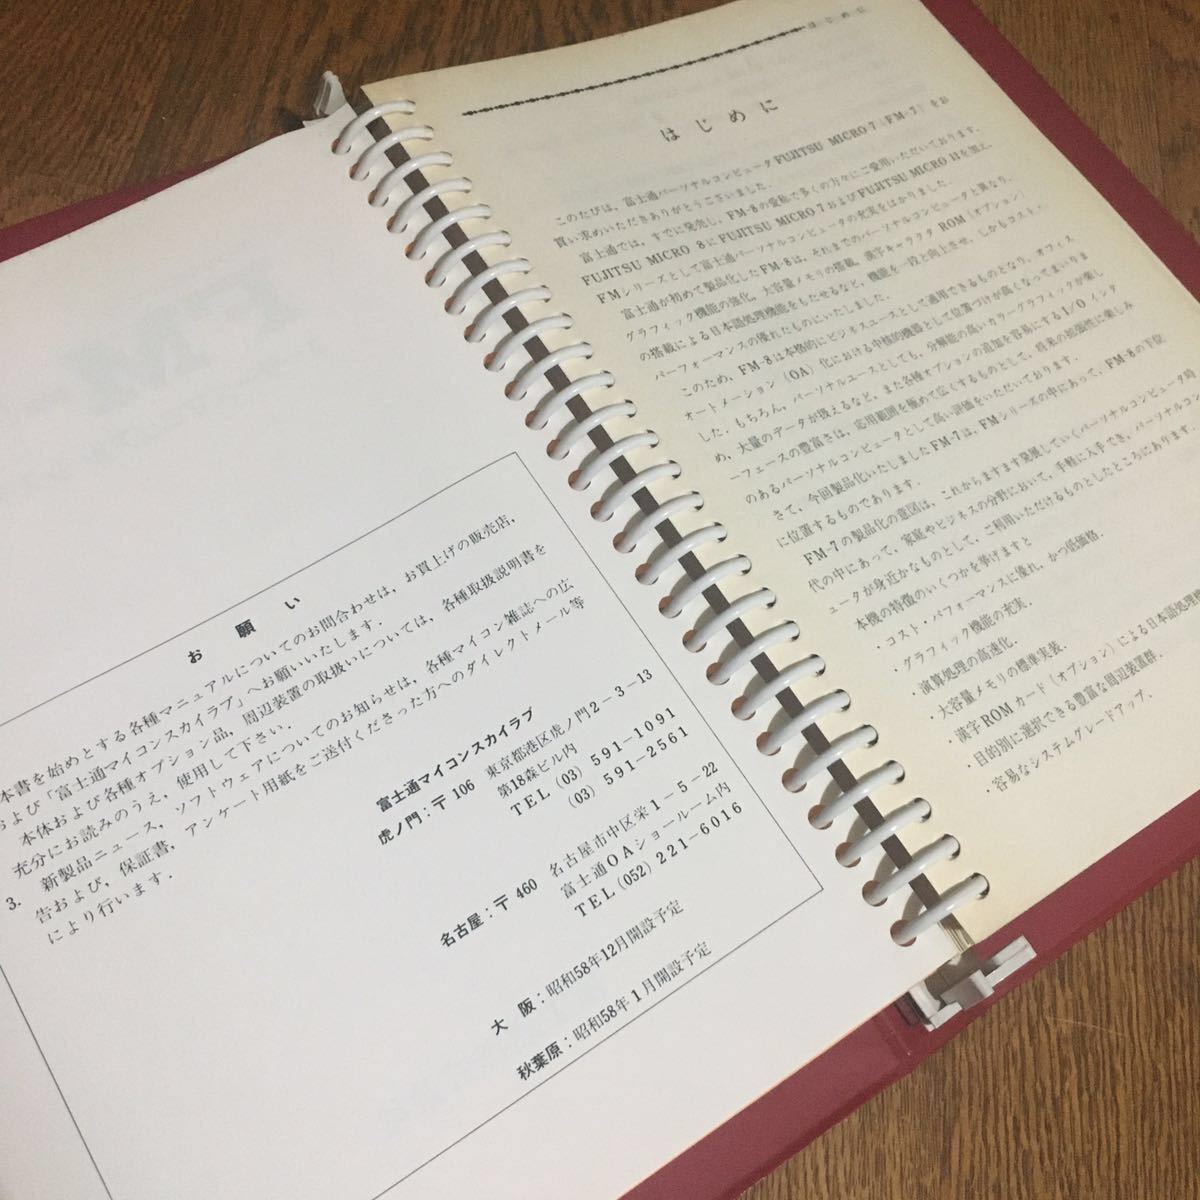 FUJITSU Fujitsu *FUJITSU MICRO 7 (FM-7) приложен manual все 6 пункт + Friendjy Book и т.п. комплект * Showa Retro 